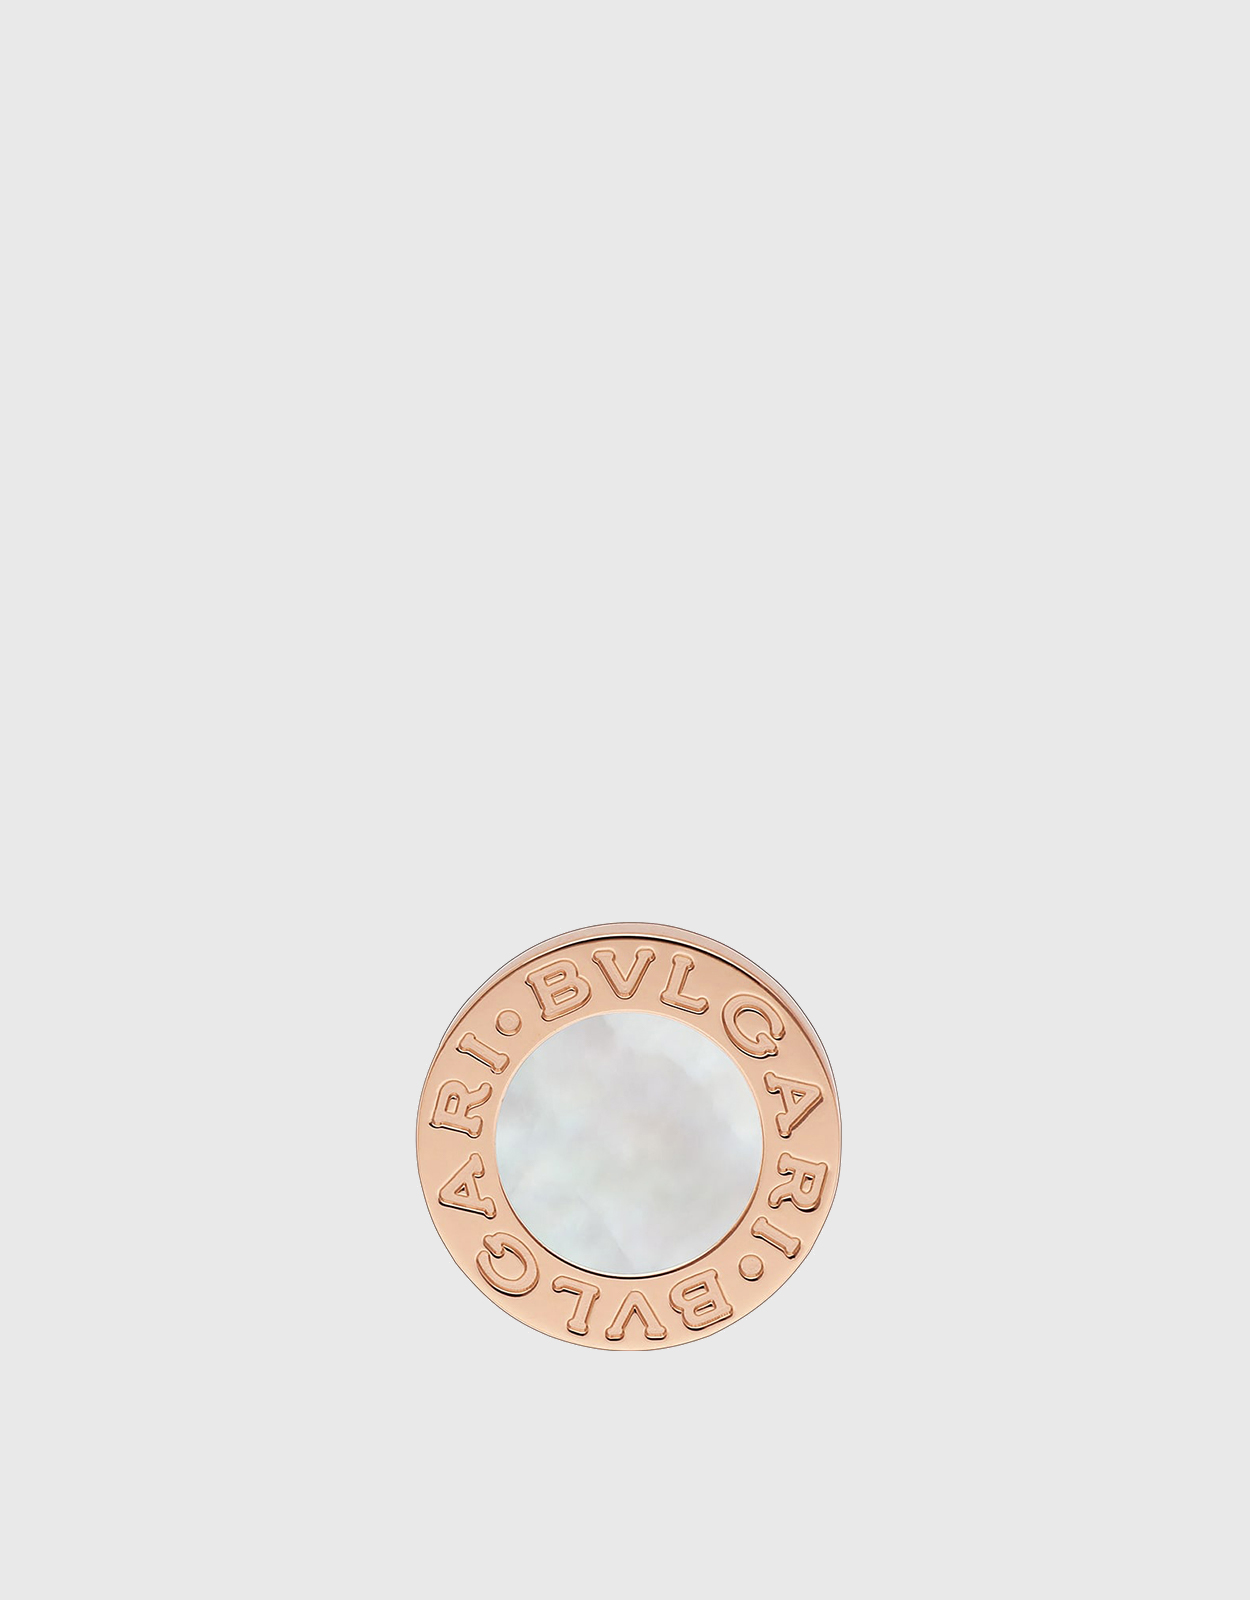 Bulgari Serpenti earrings in 18 kt white gold, set with full pavé diamonds  351426 OR857499 - JewelryReluxe